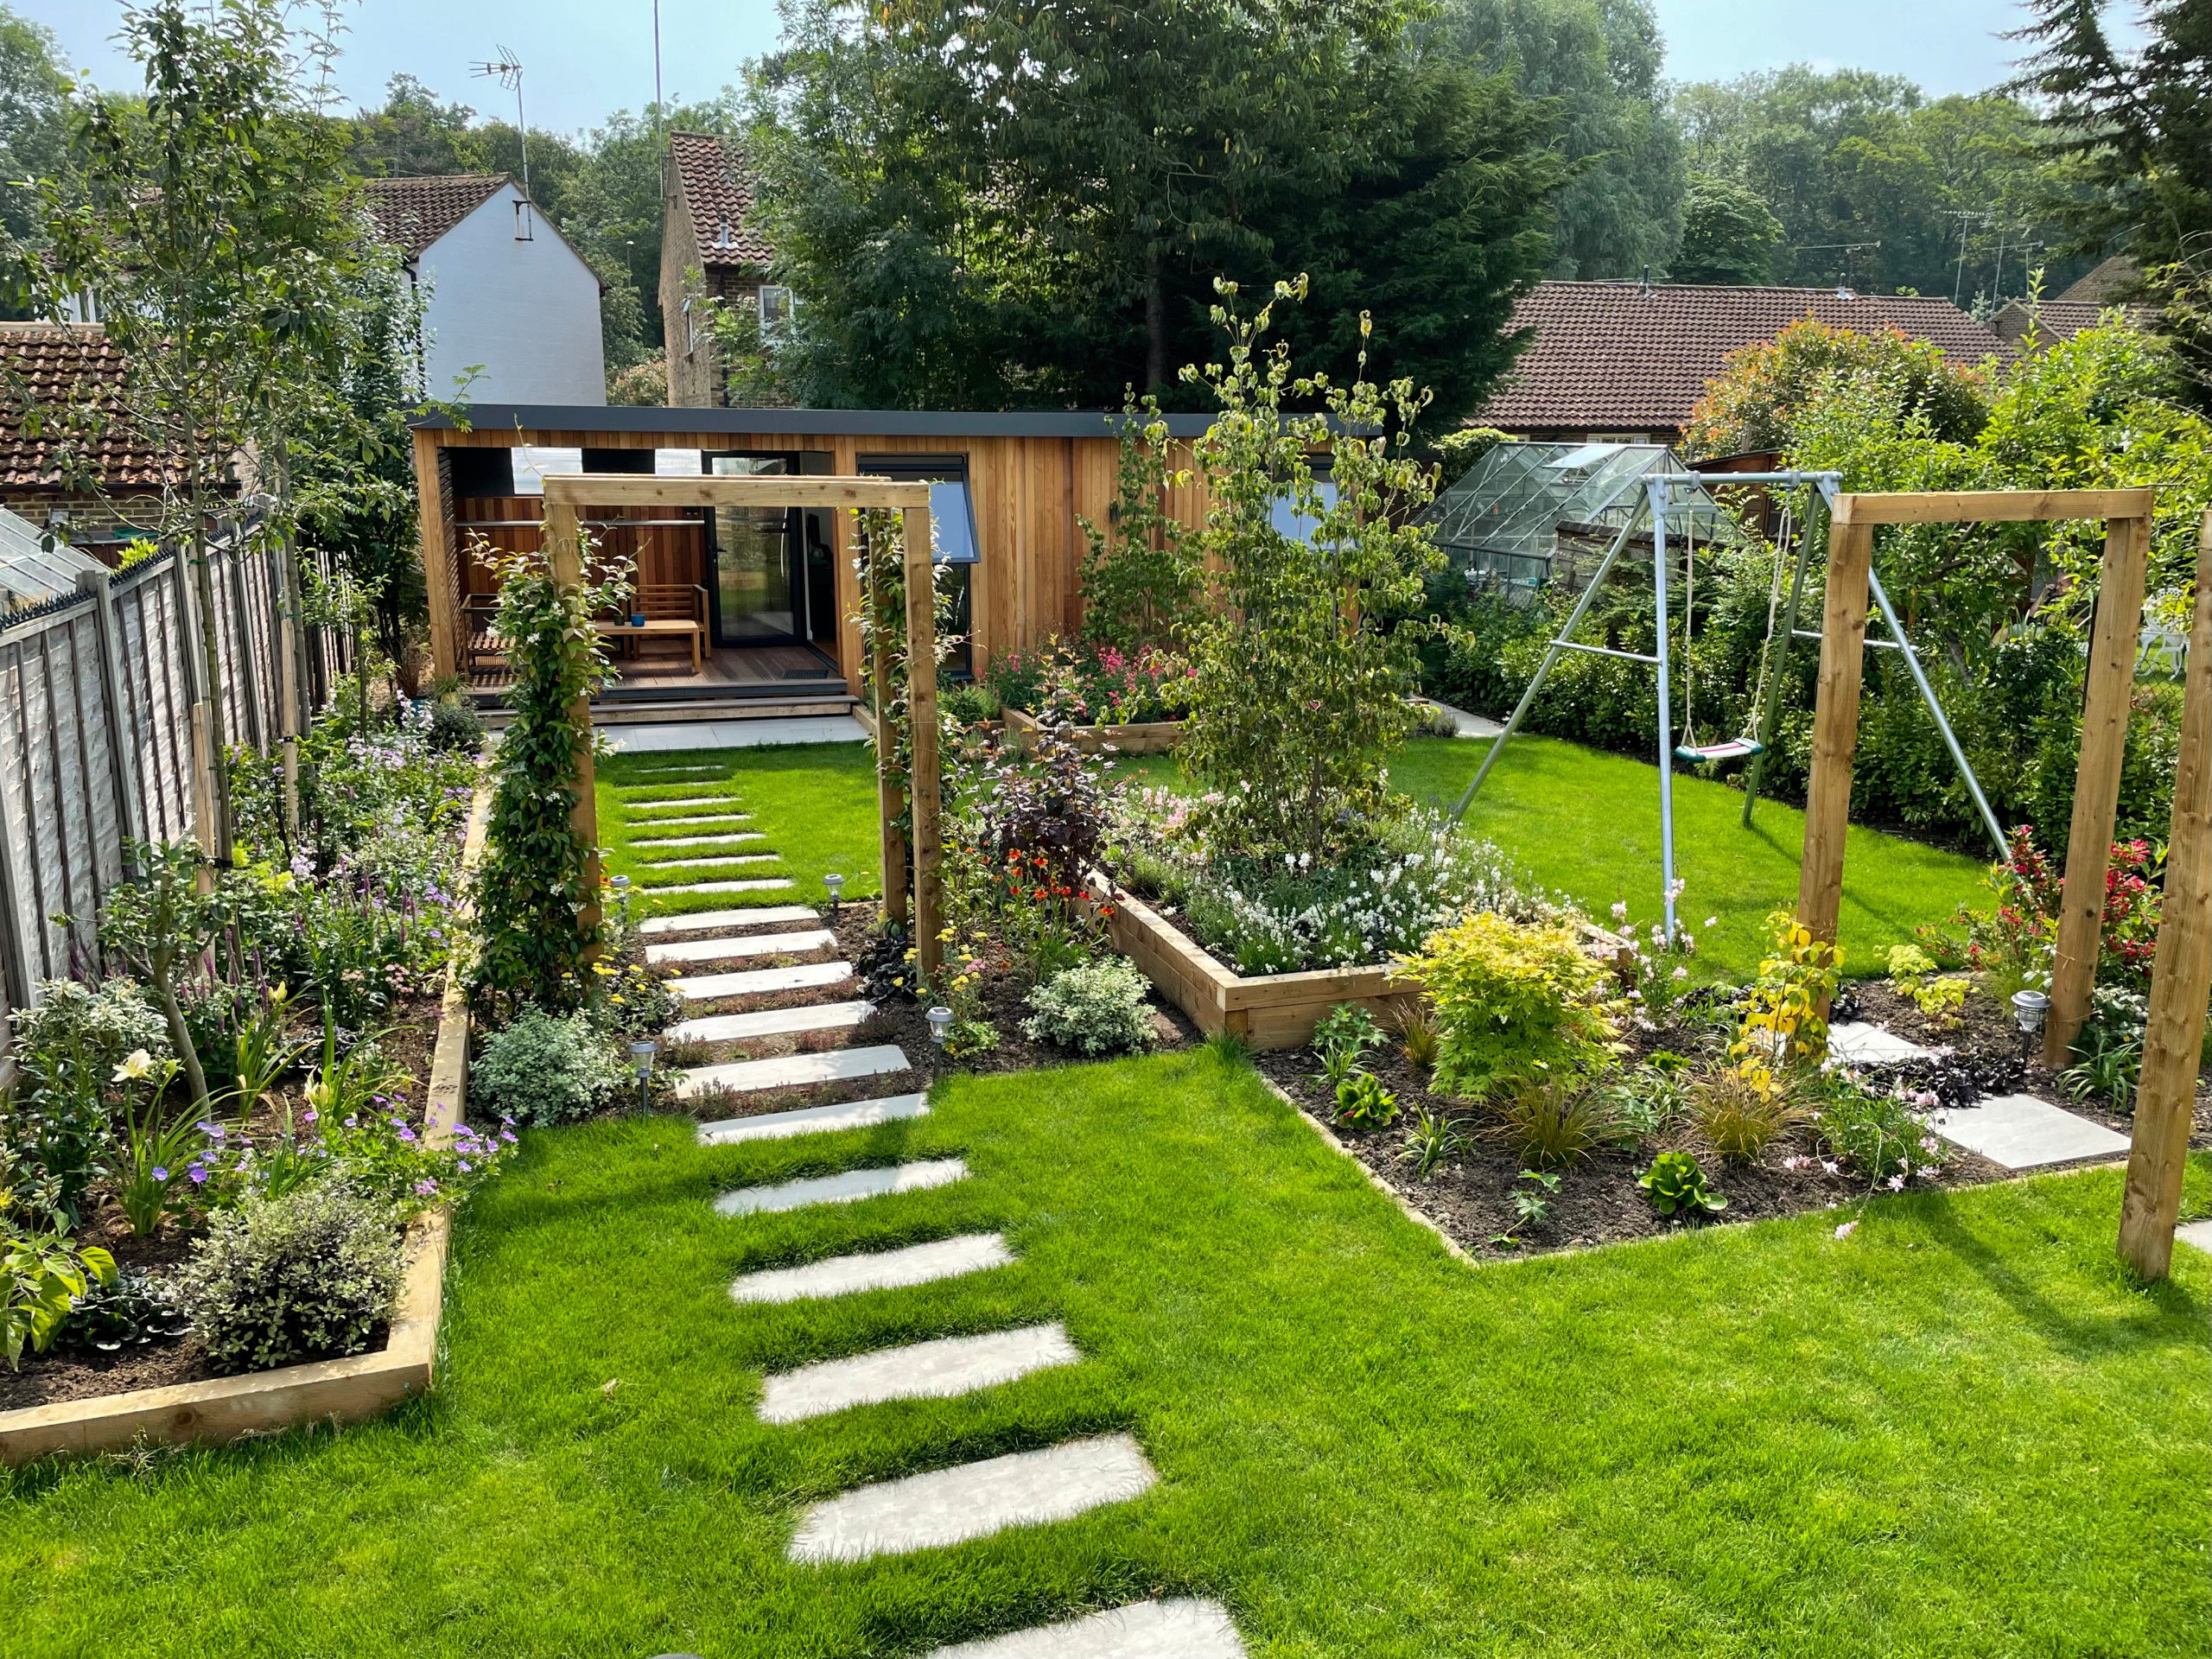 75 Beautiful Garden Ideas And Designs